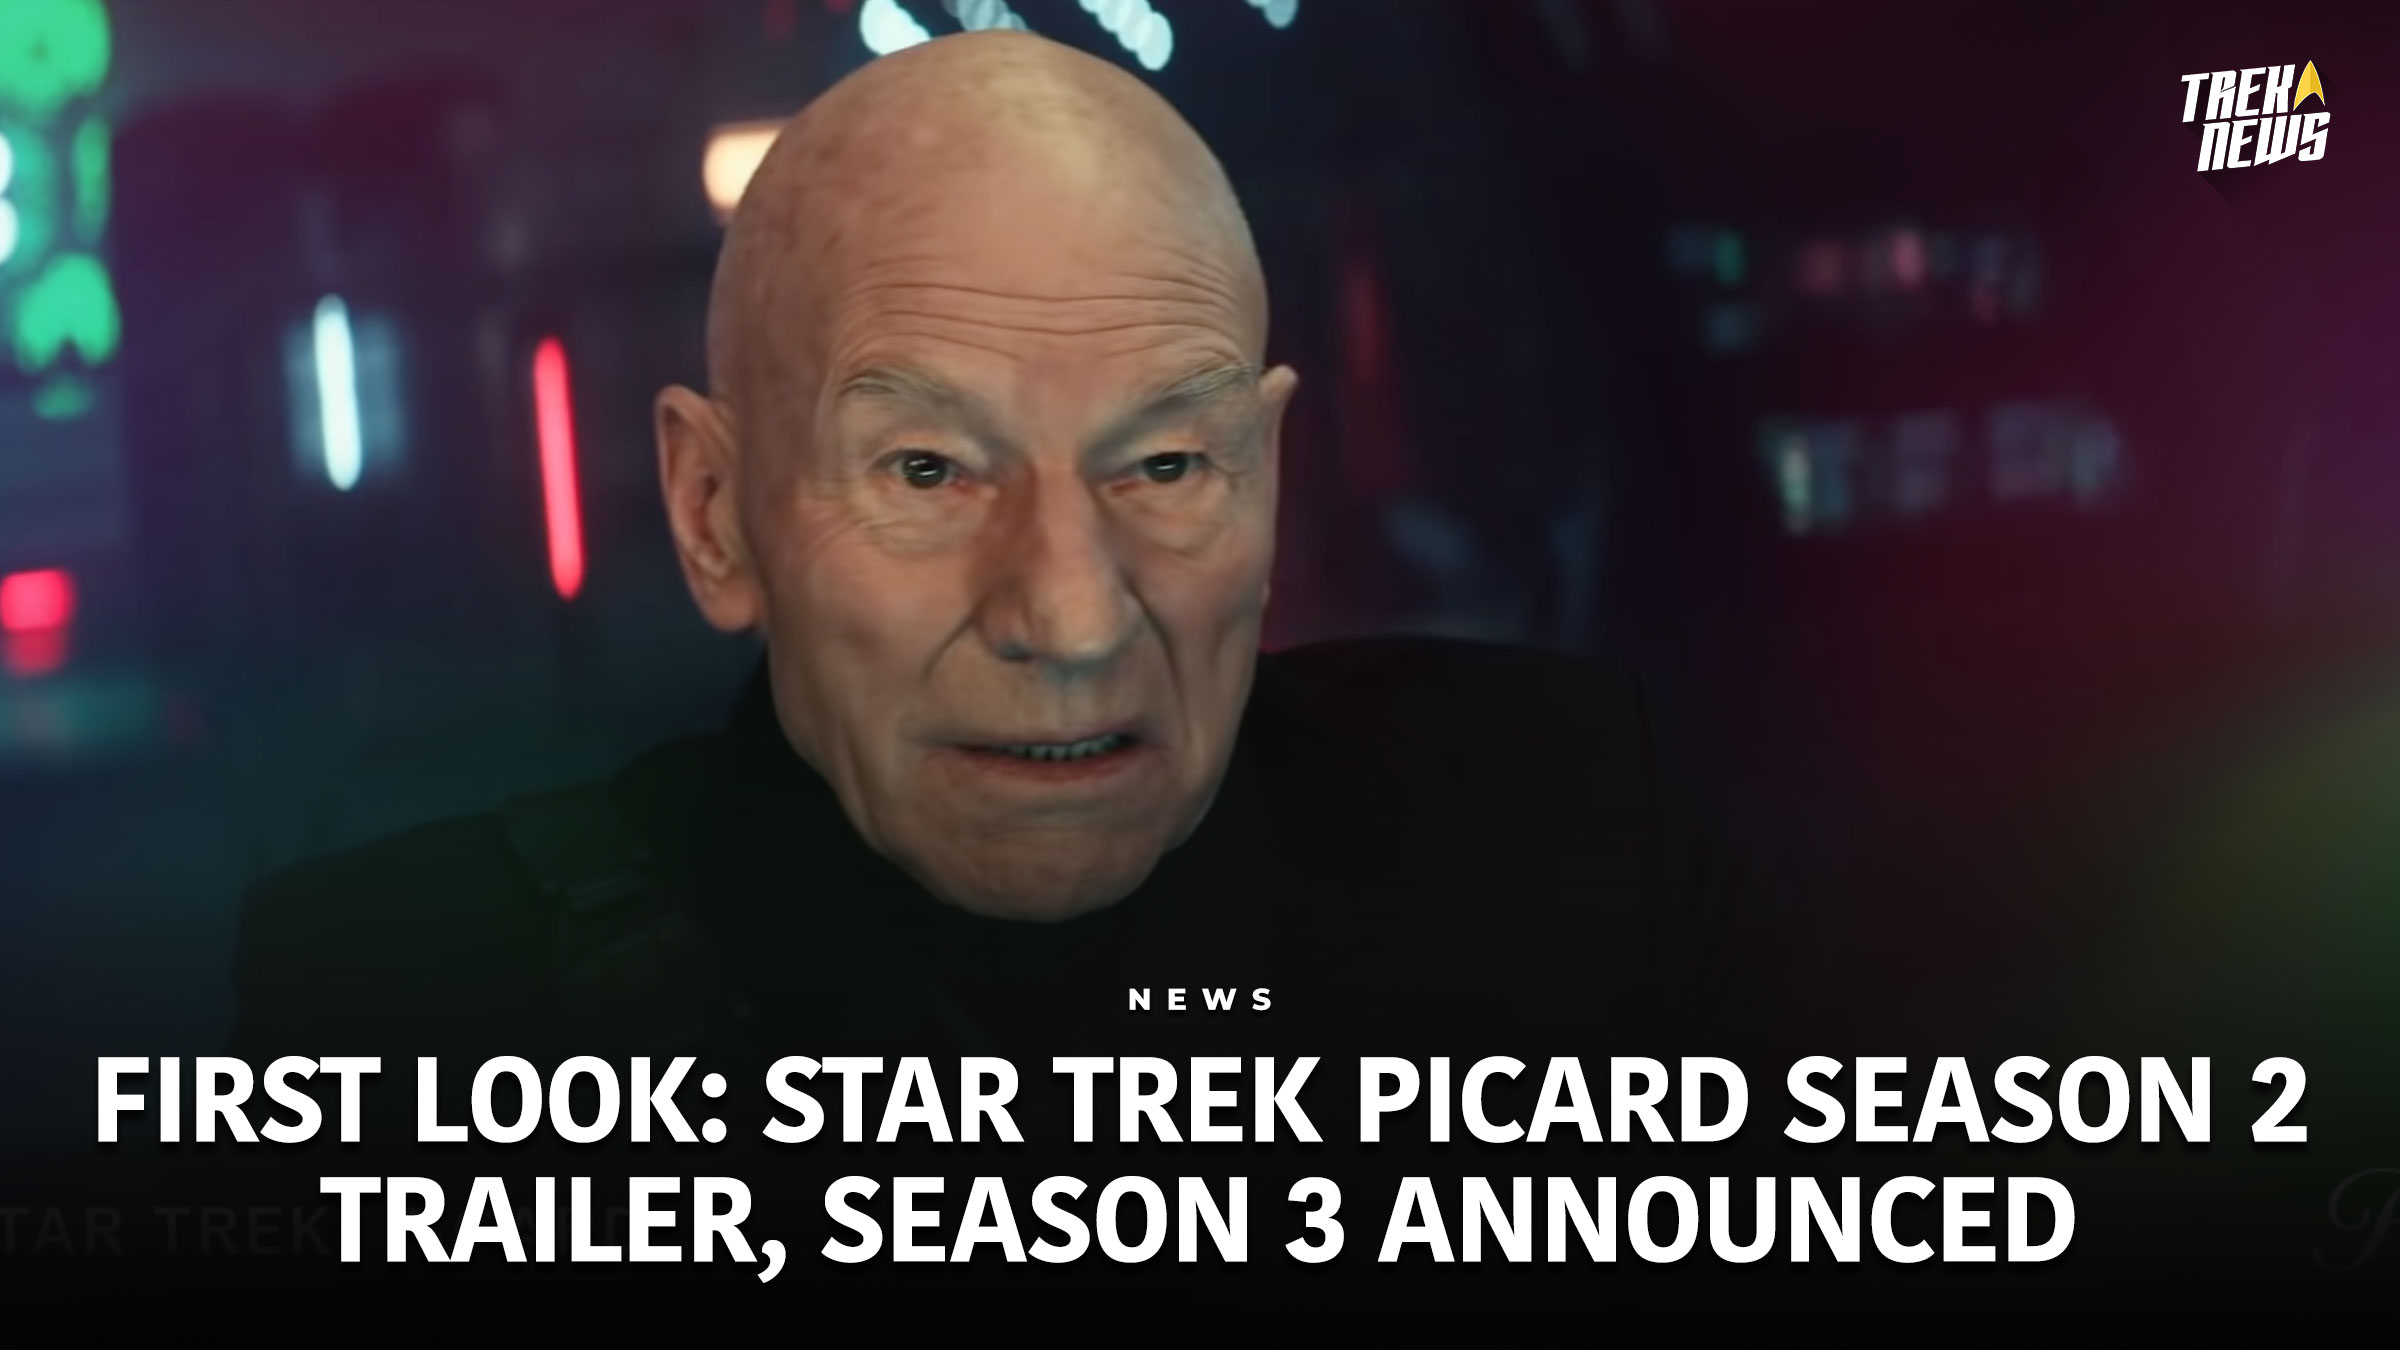 First Look: Star Trek Picard Season 2 Trailer Takes Us “Home”, Season 3 Officially Announced